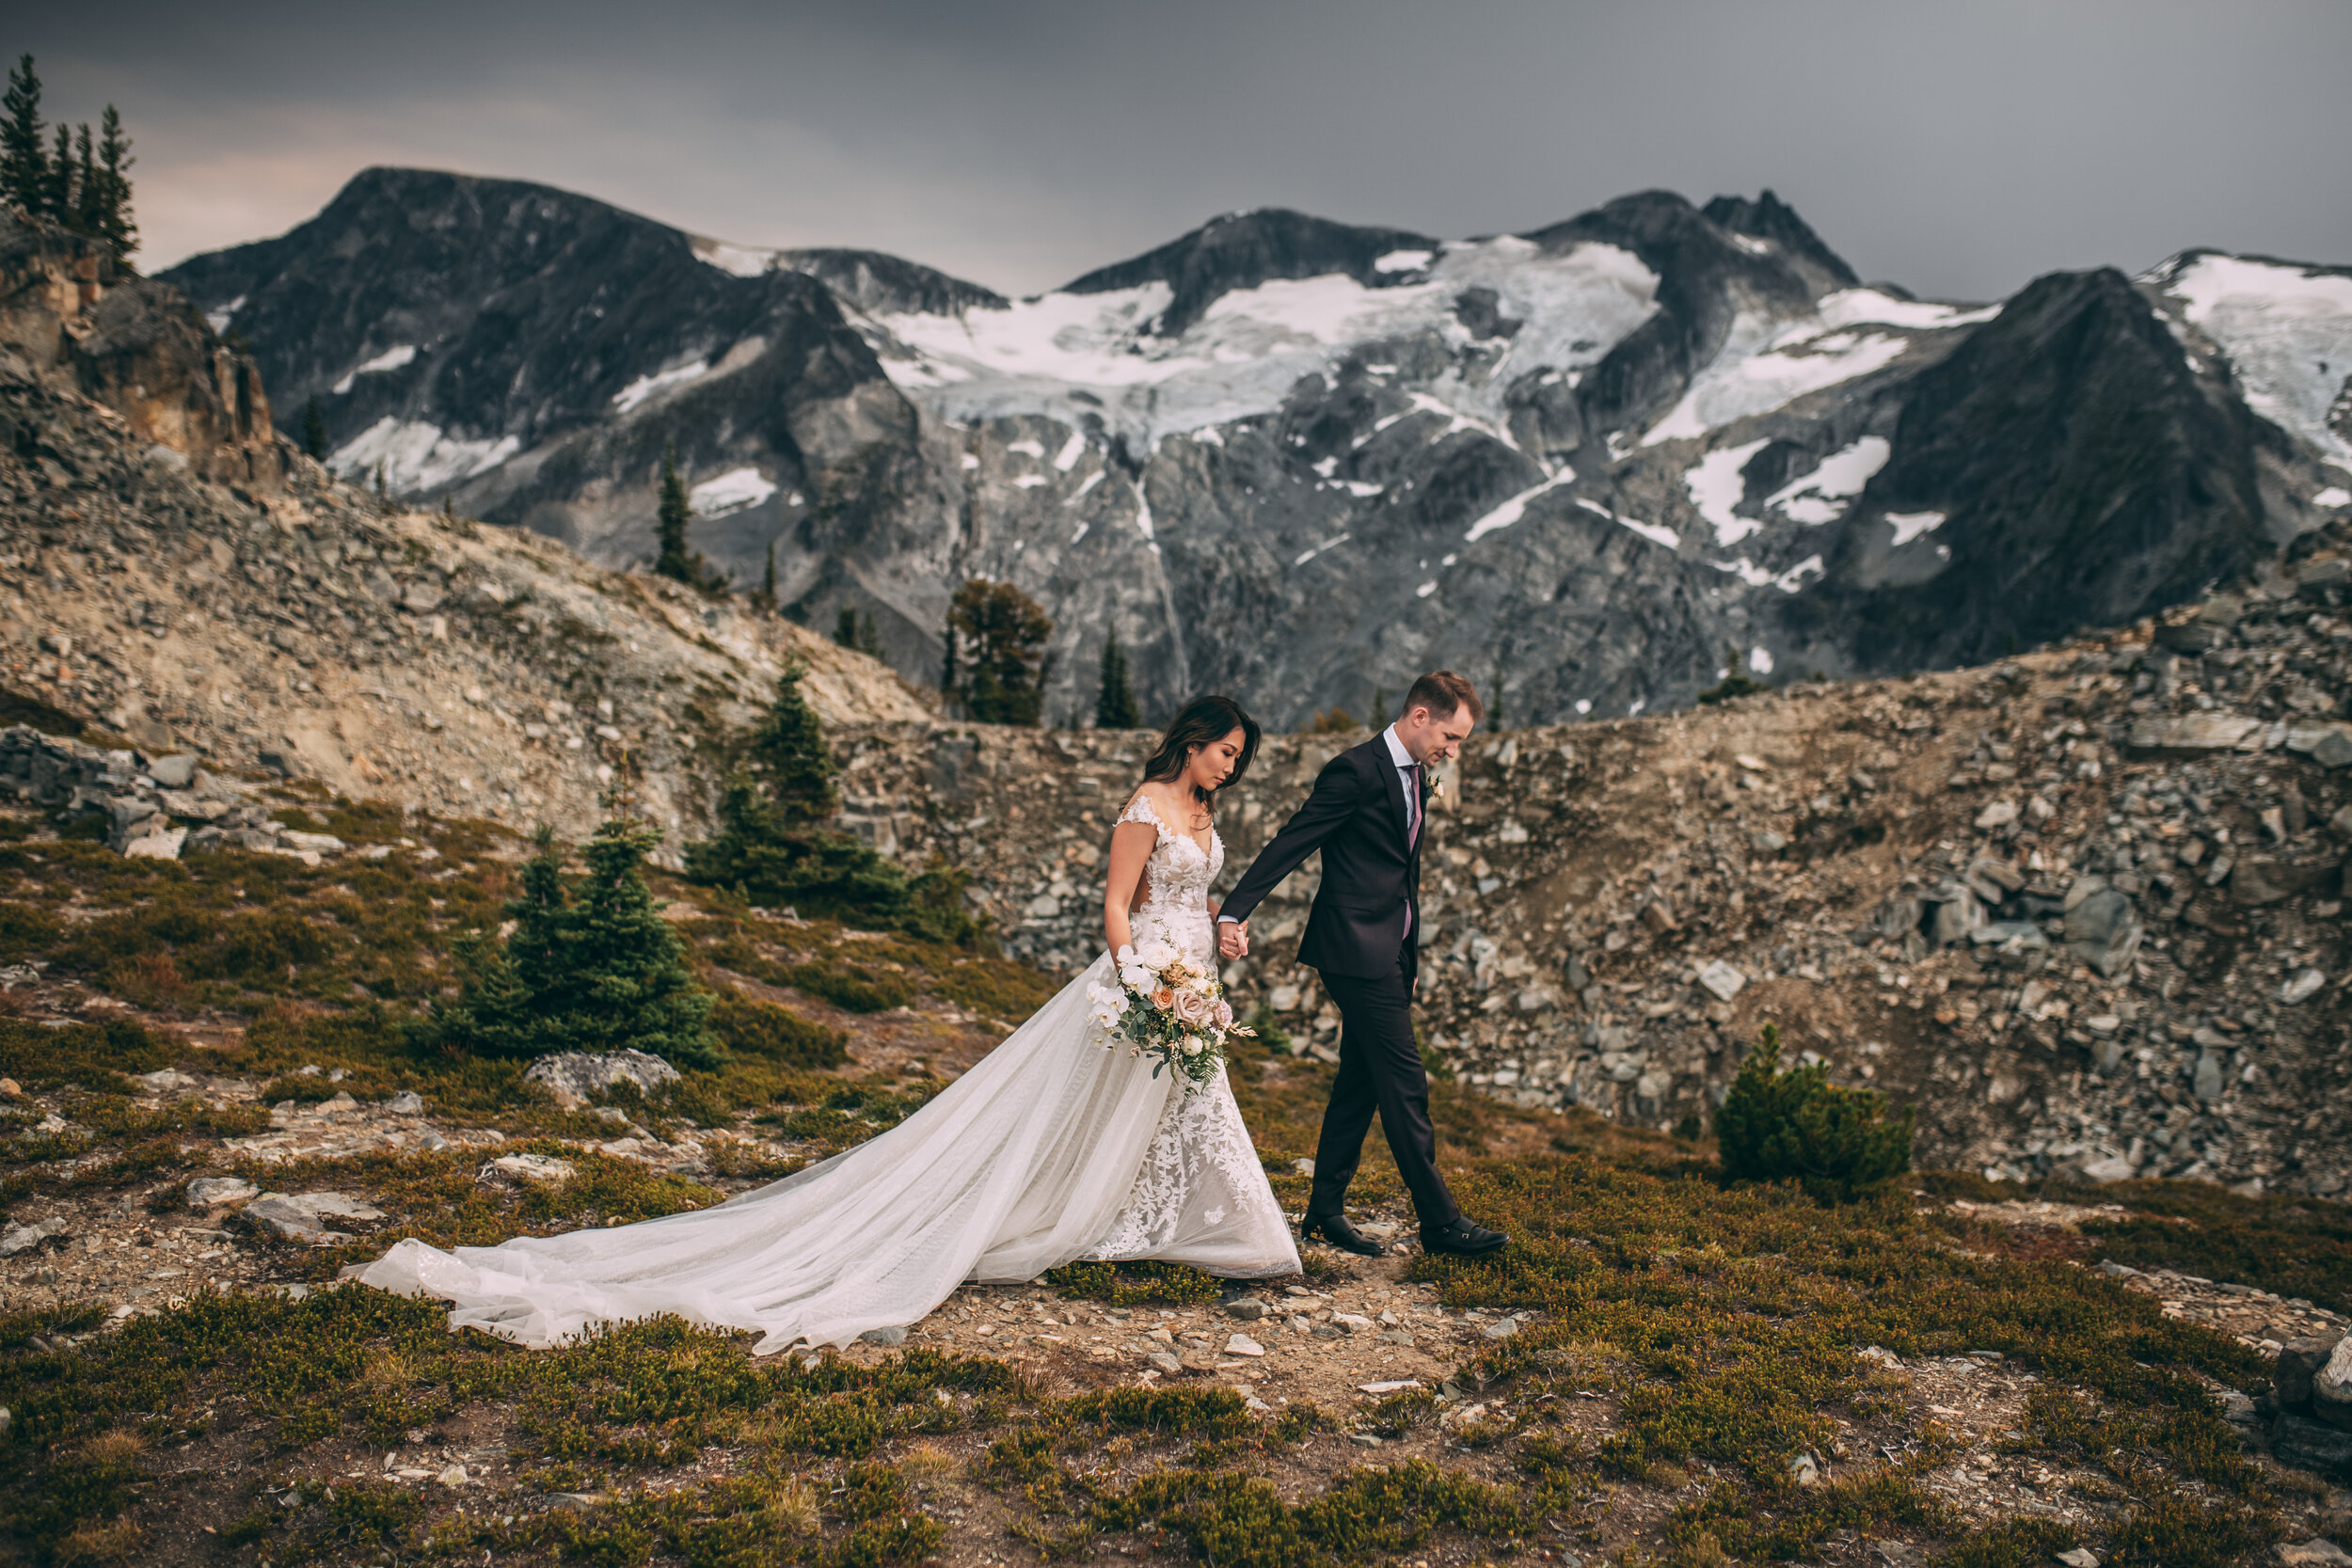 Katherine & Jamie Sneak Peeks - Mountain Top Elopement - Whistler BC - Laura Olson Photography--7.jpg